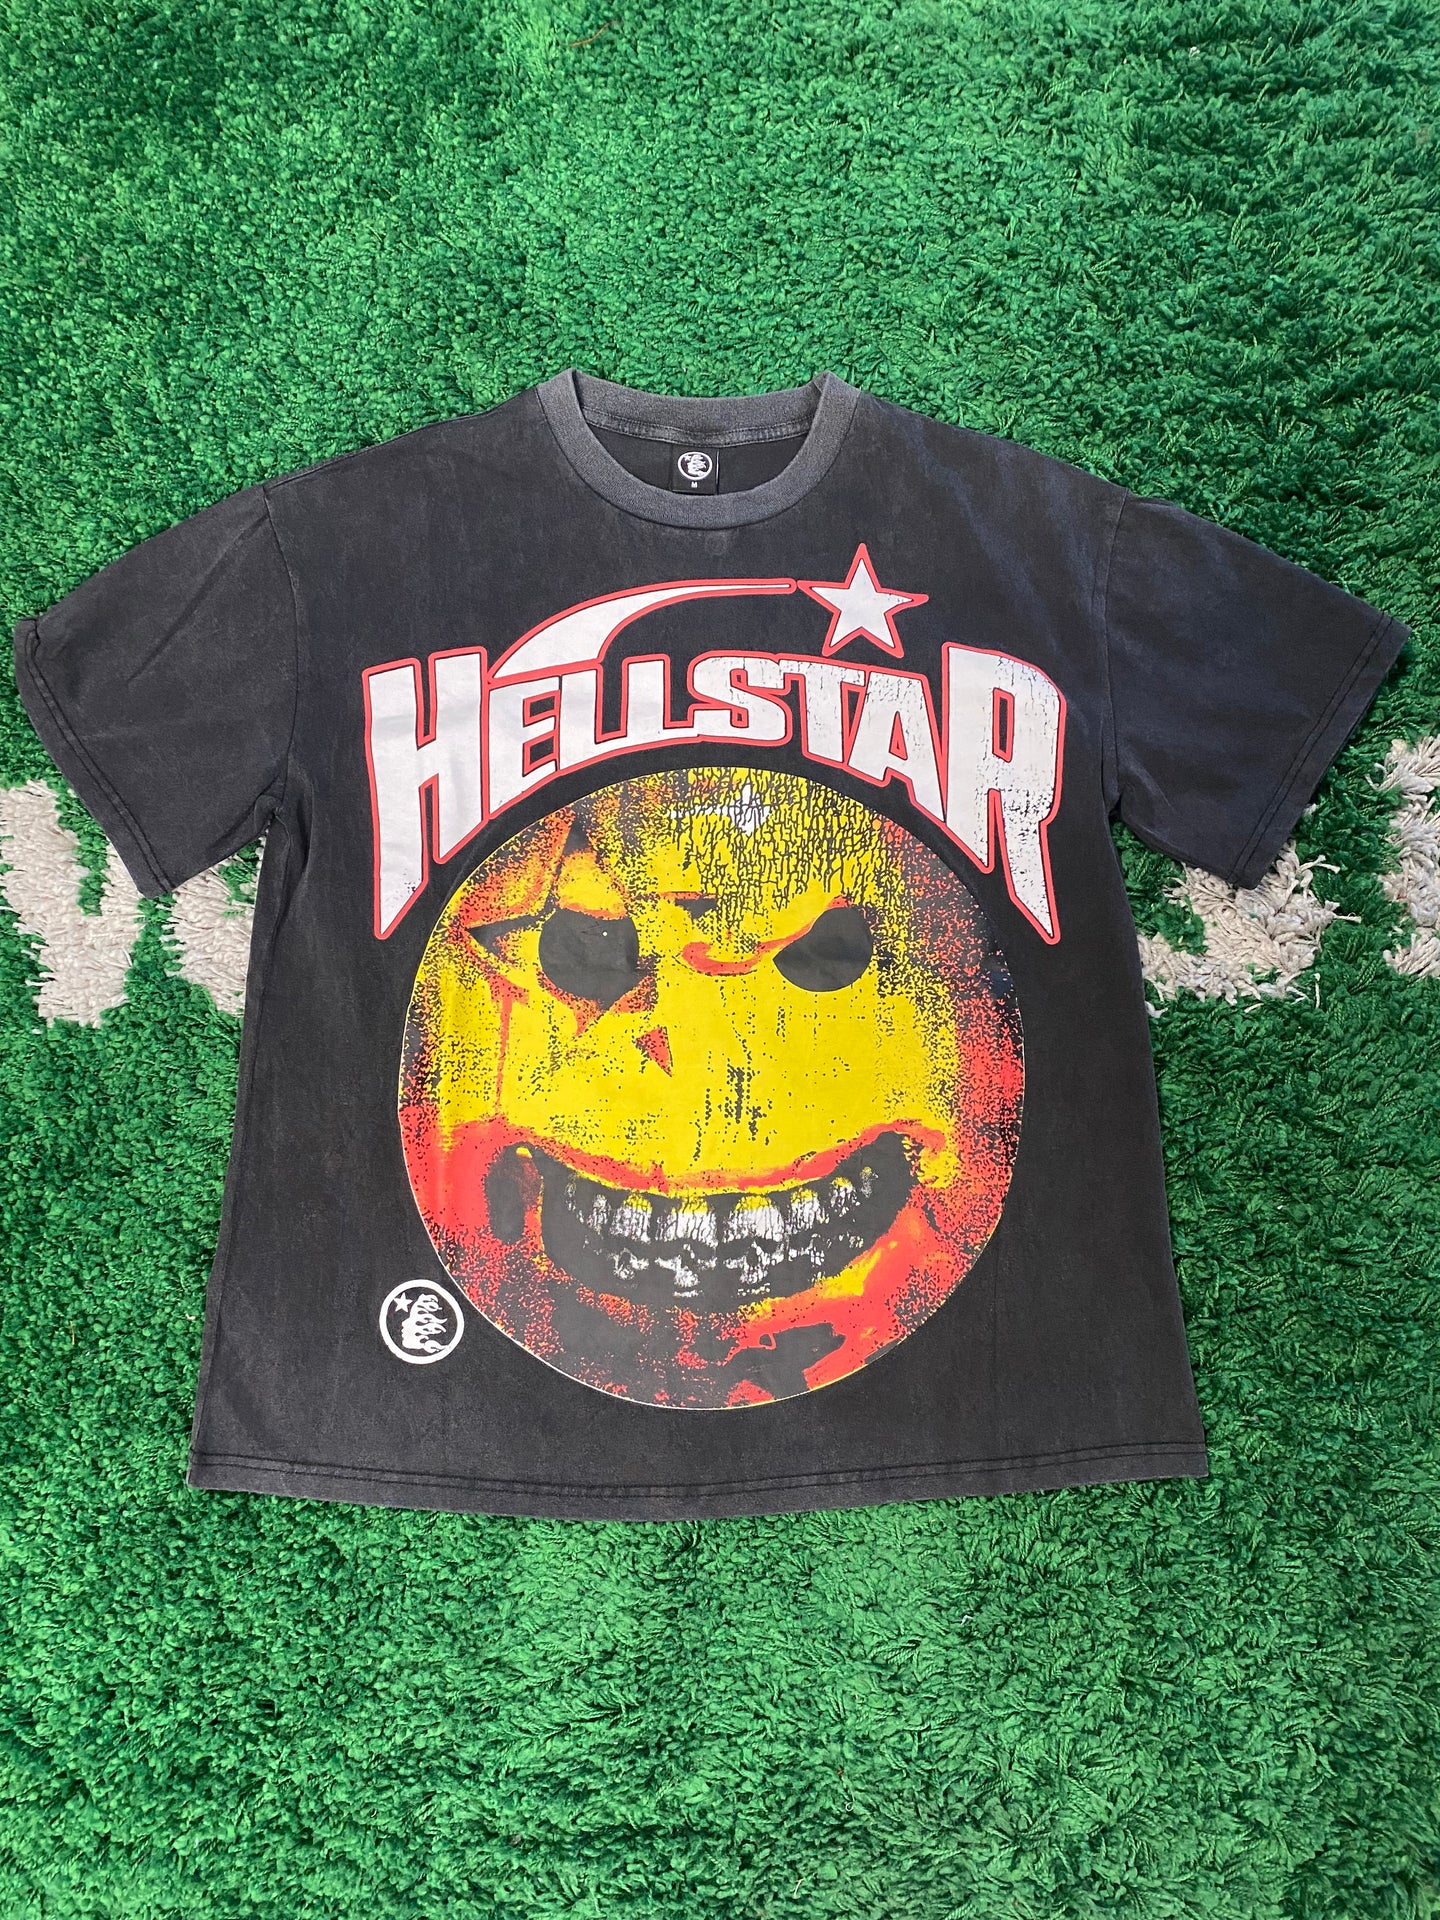 Hellstar ‘Smiley’ Shirt - Black/Yellow/Red